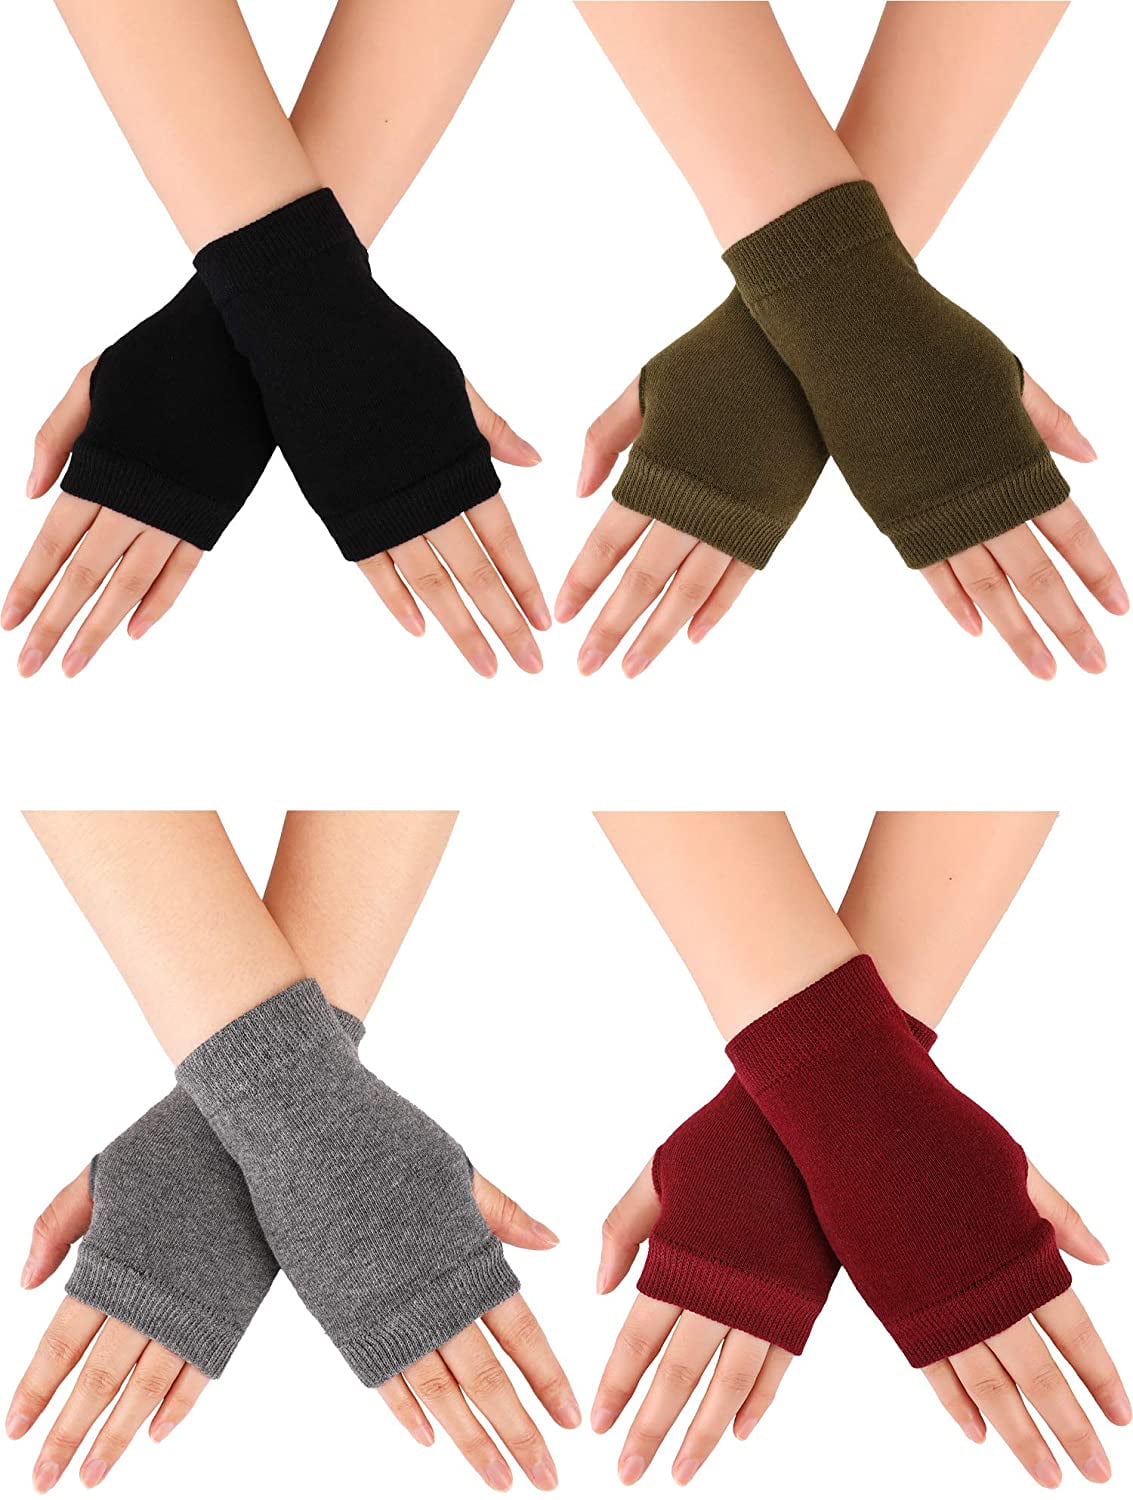 Mens Knit Fingerless Gloves Soft Winter Wrist Gloves Warm Driving Half Gloves 